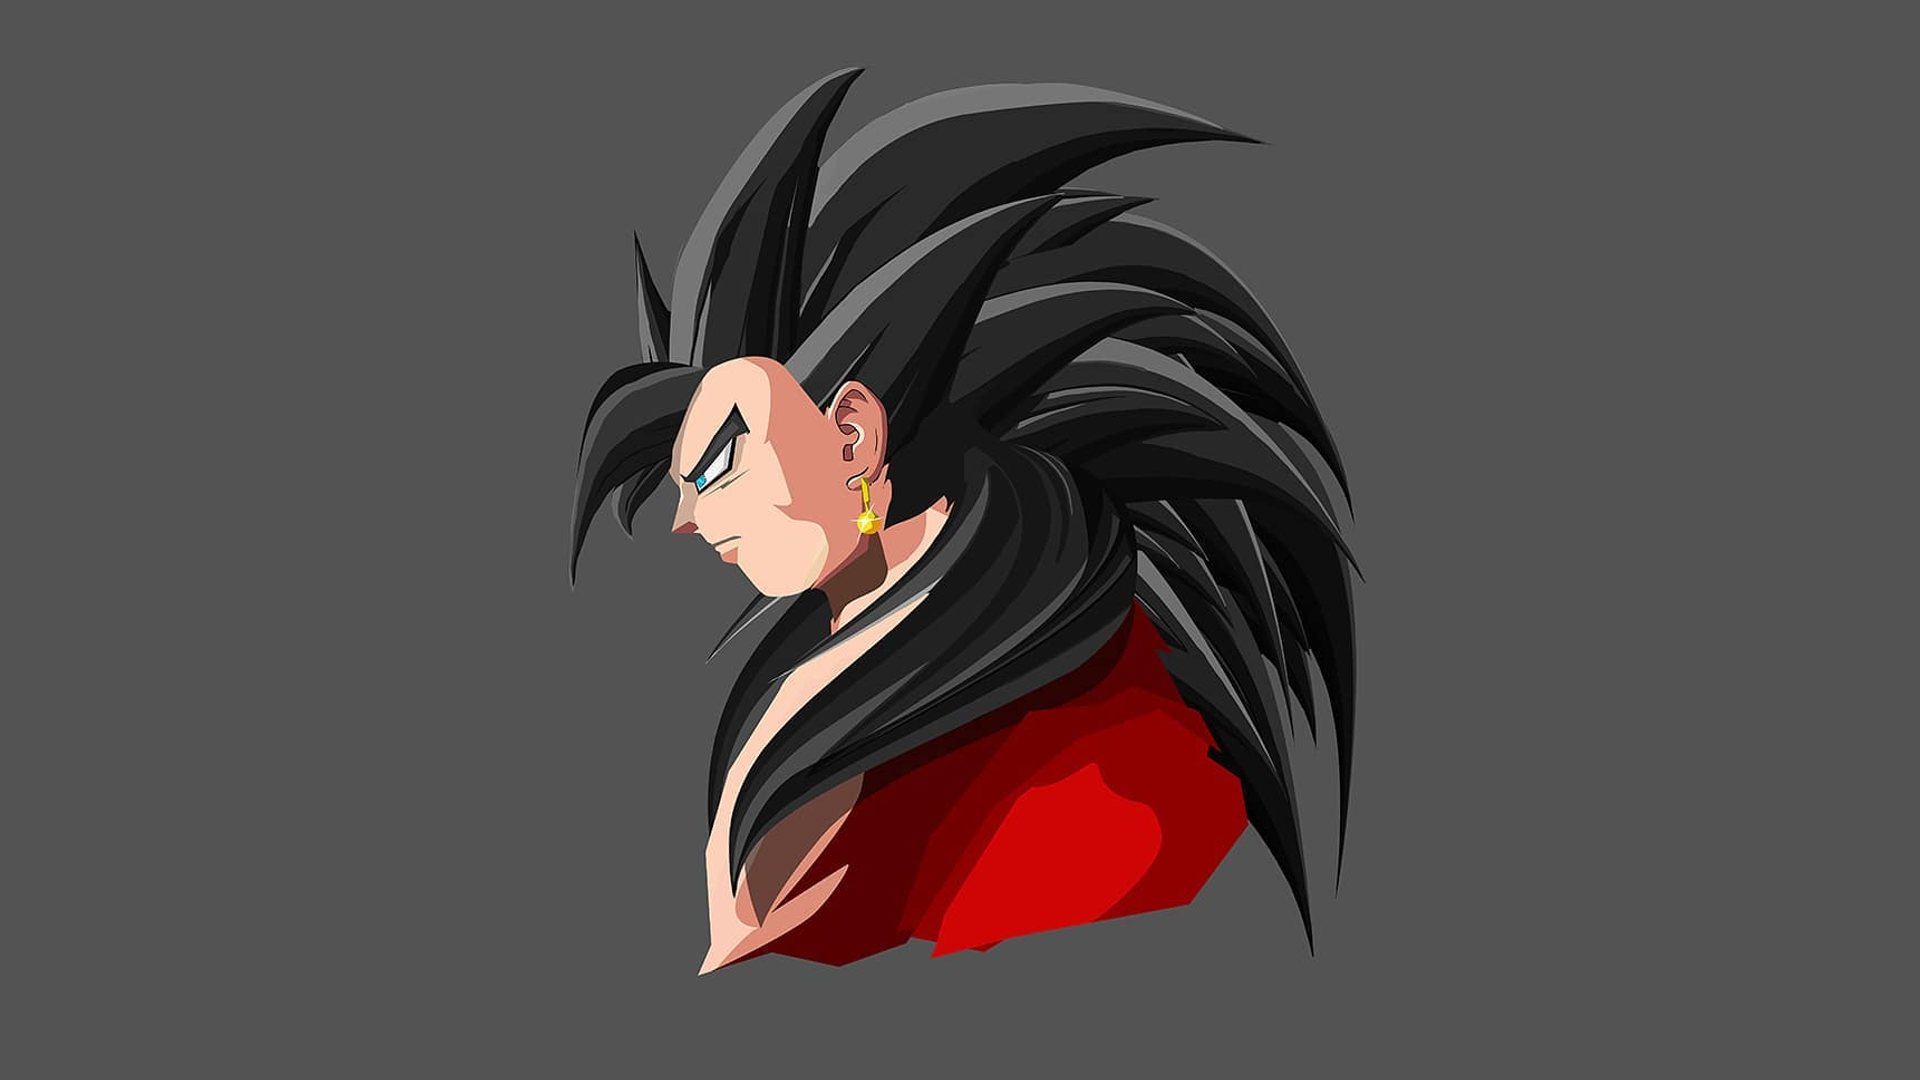 Goku by BossLogic